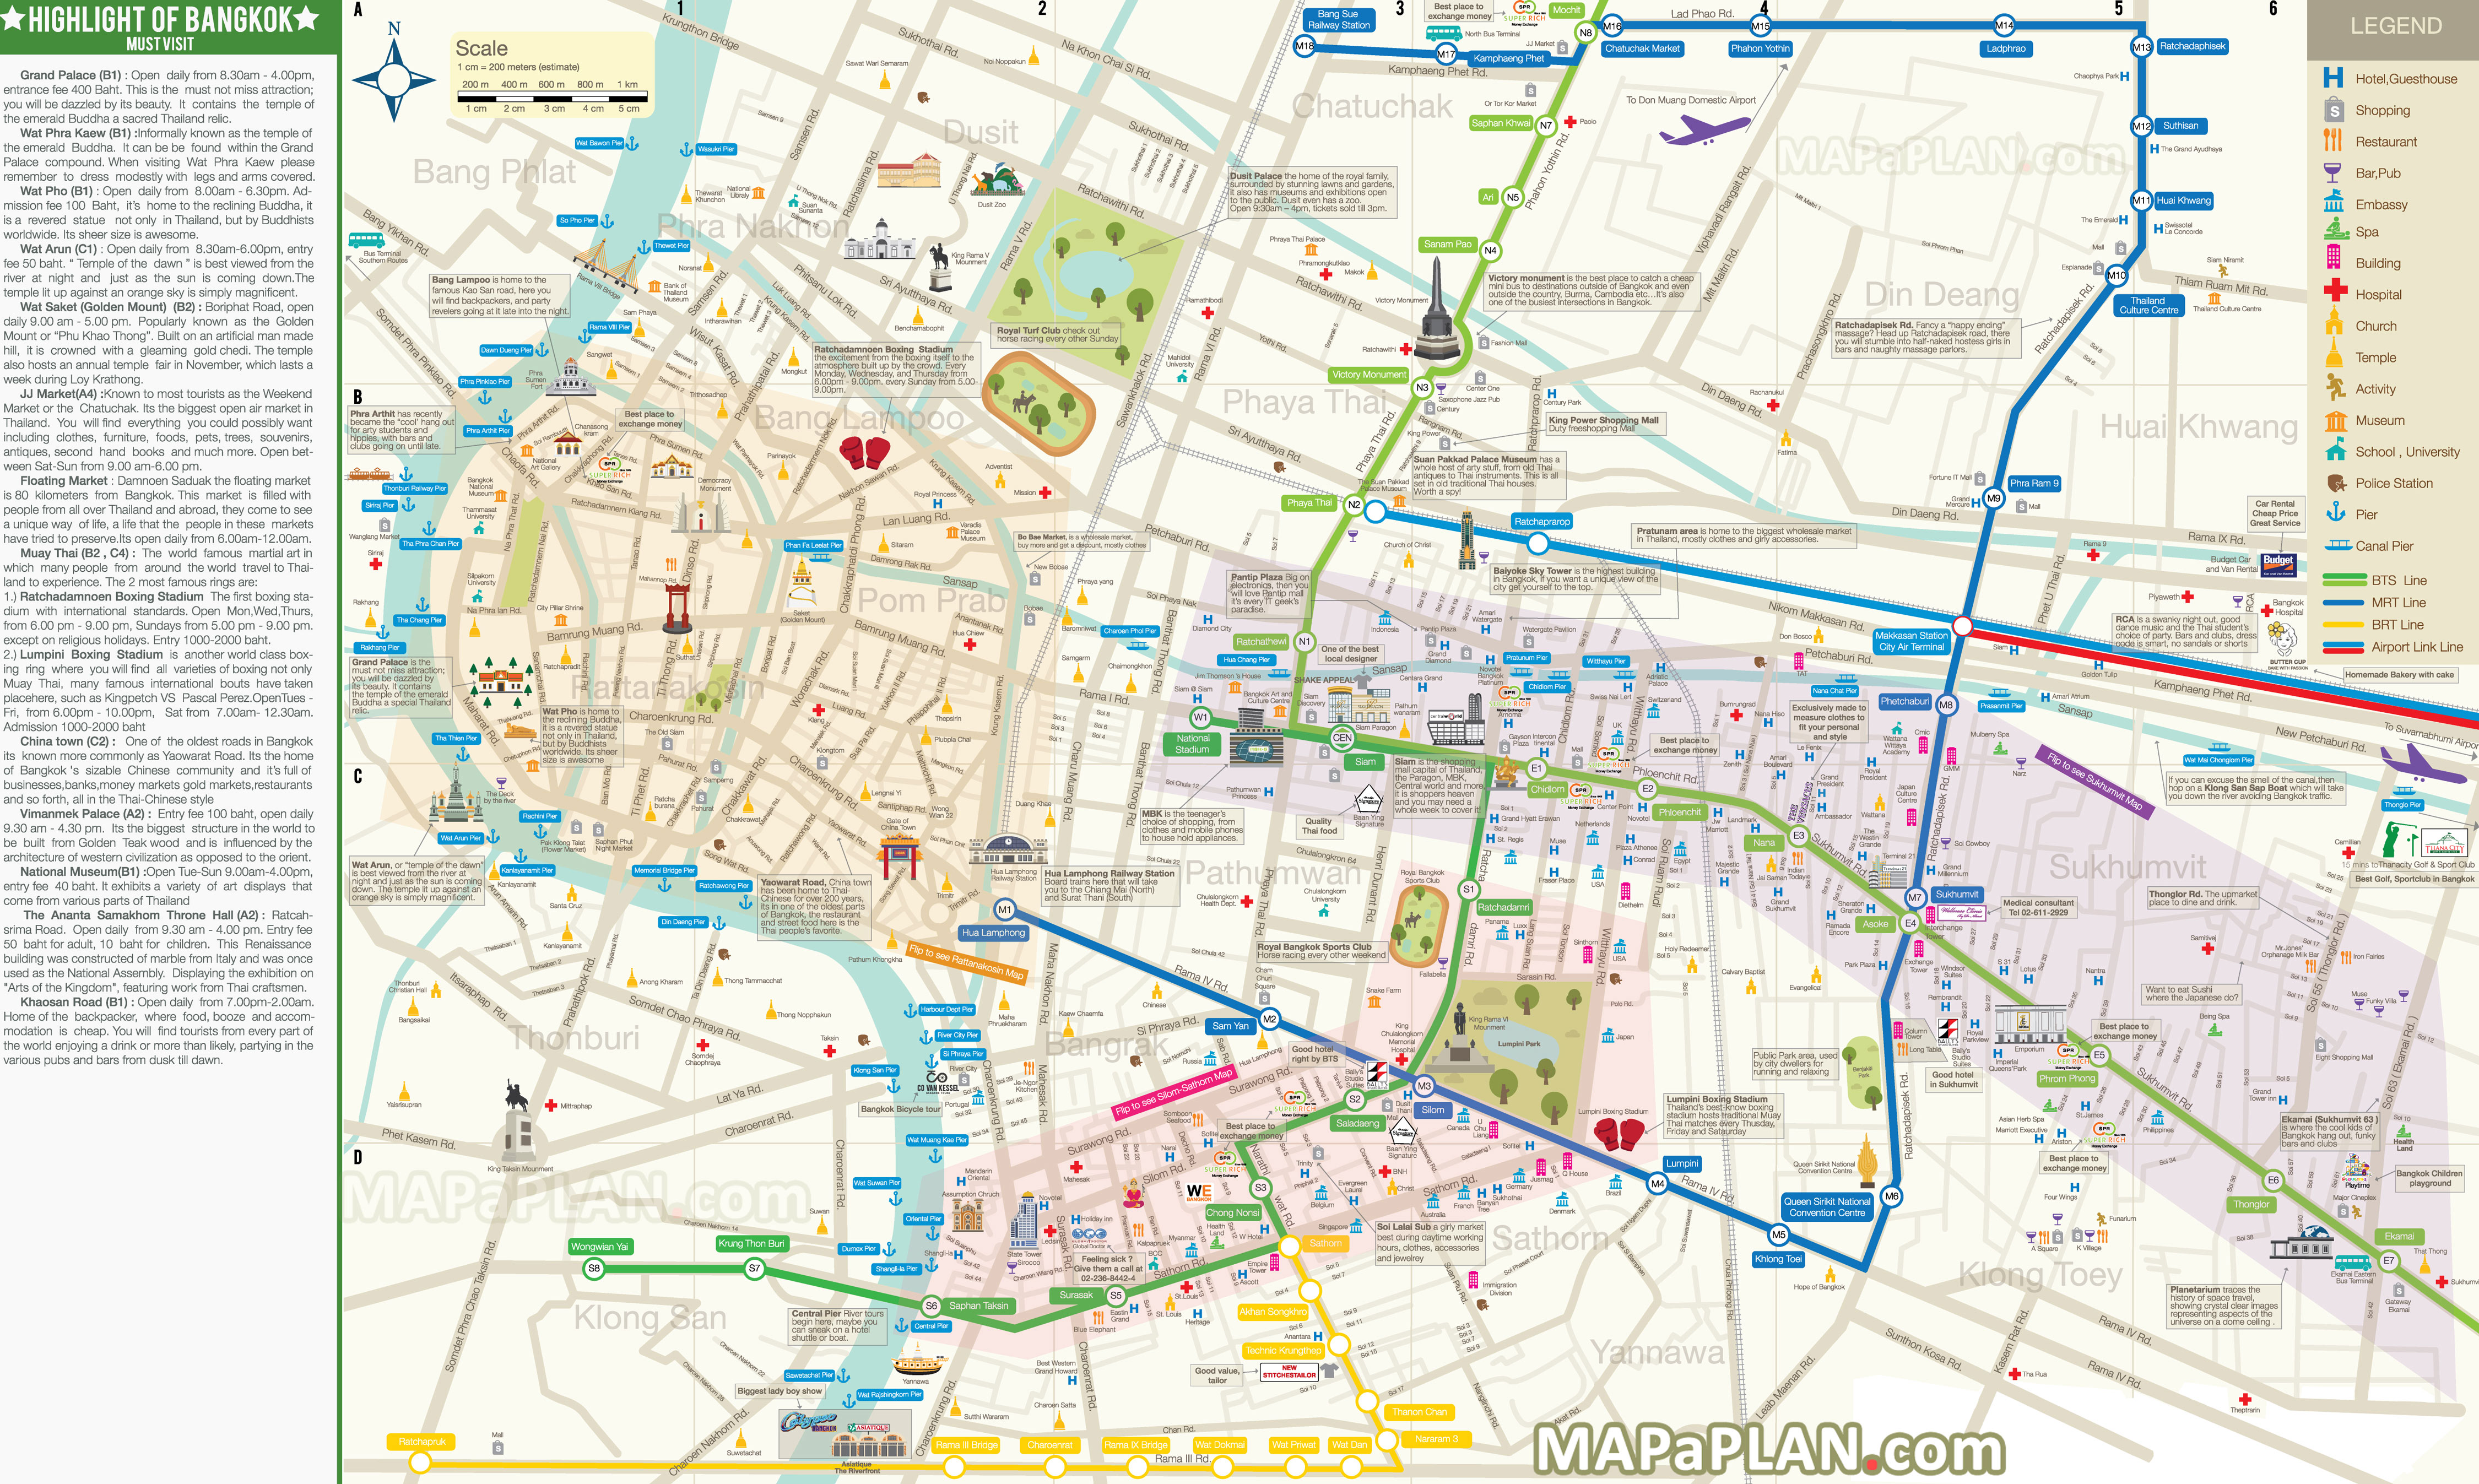 Bangkok maps - Top tourist attractions - Free, printable city ...